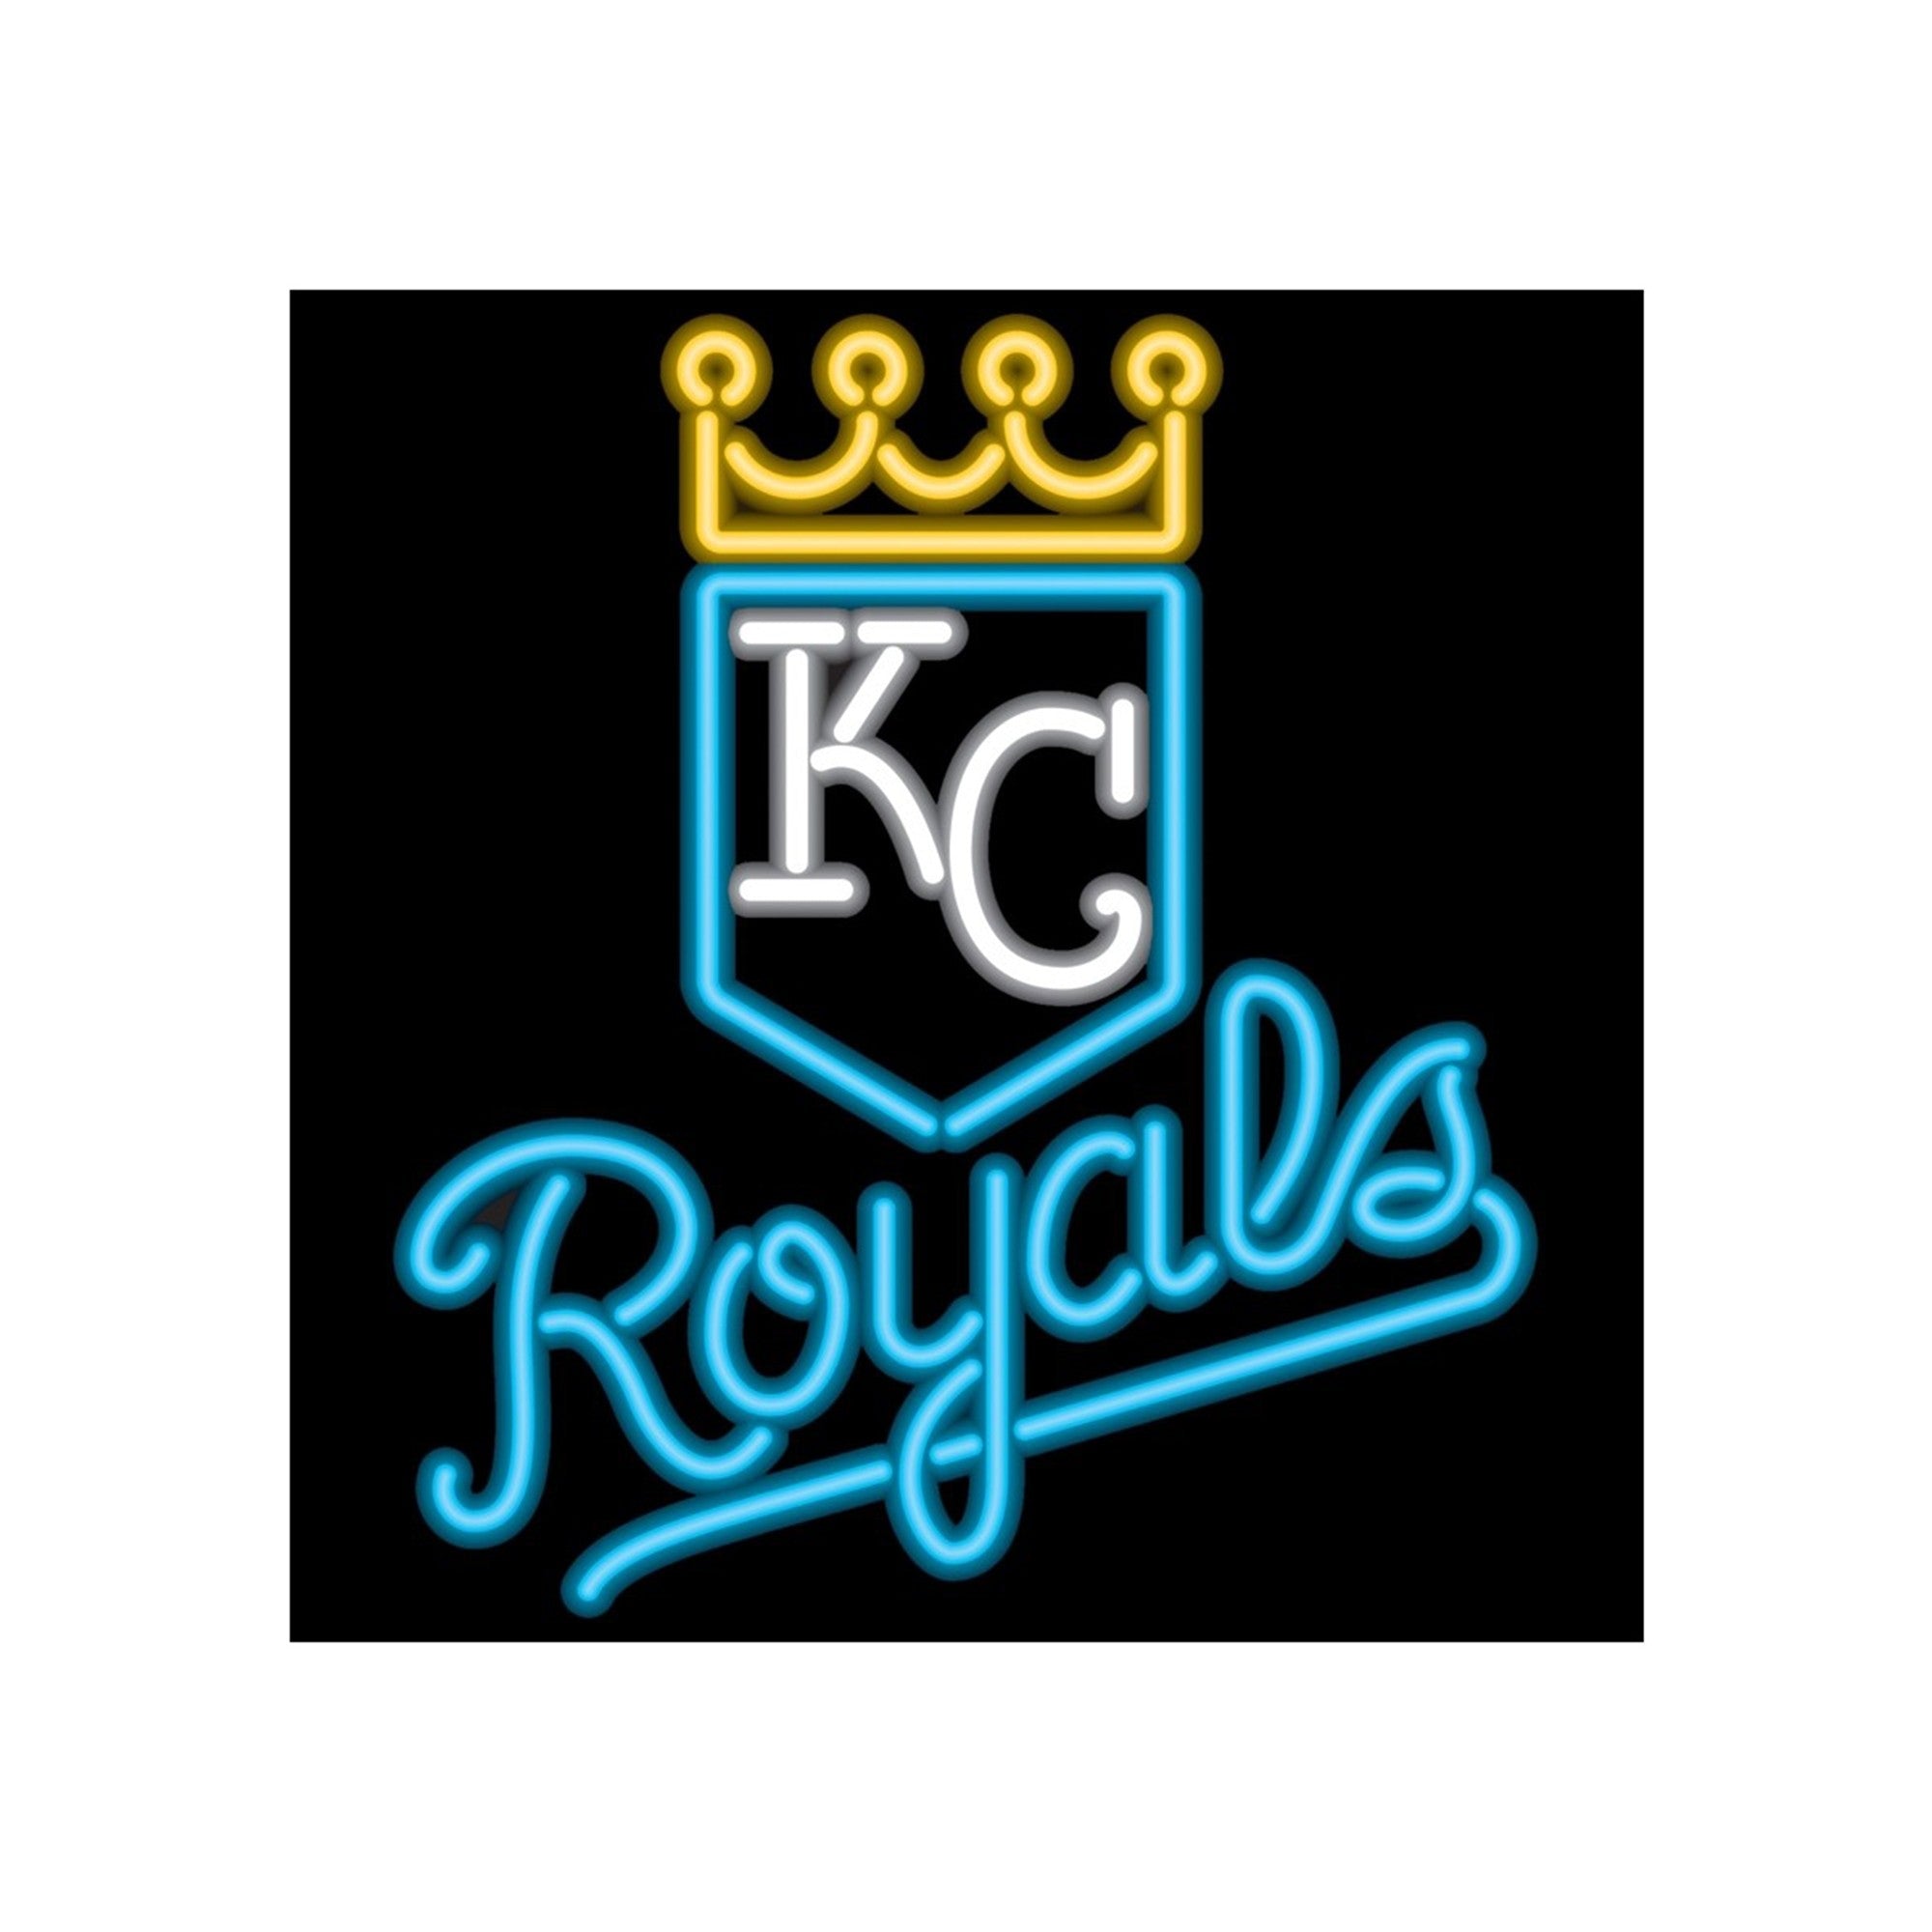 Imperial Kansas City Royals Neon Light